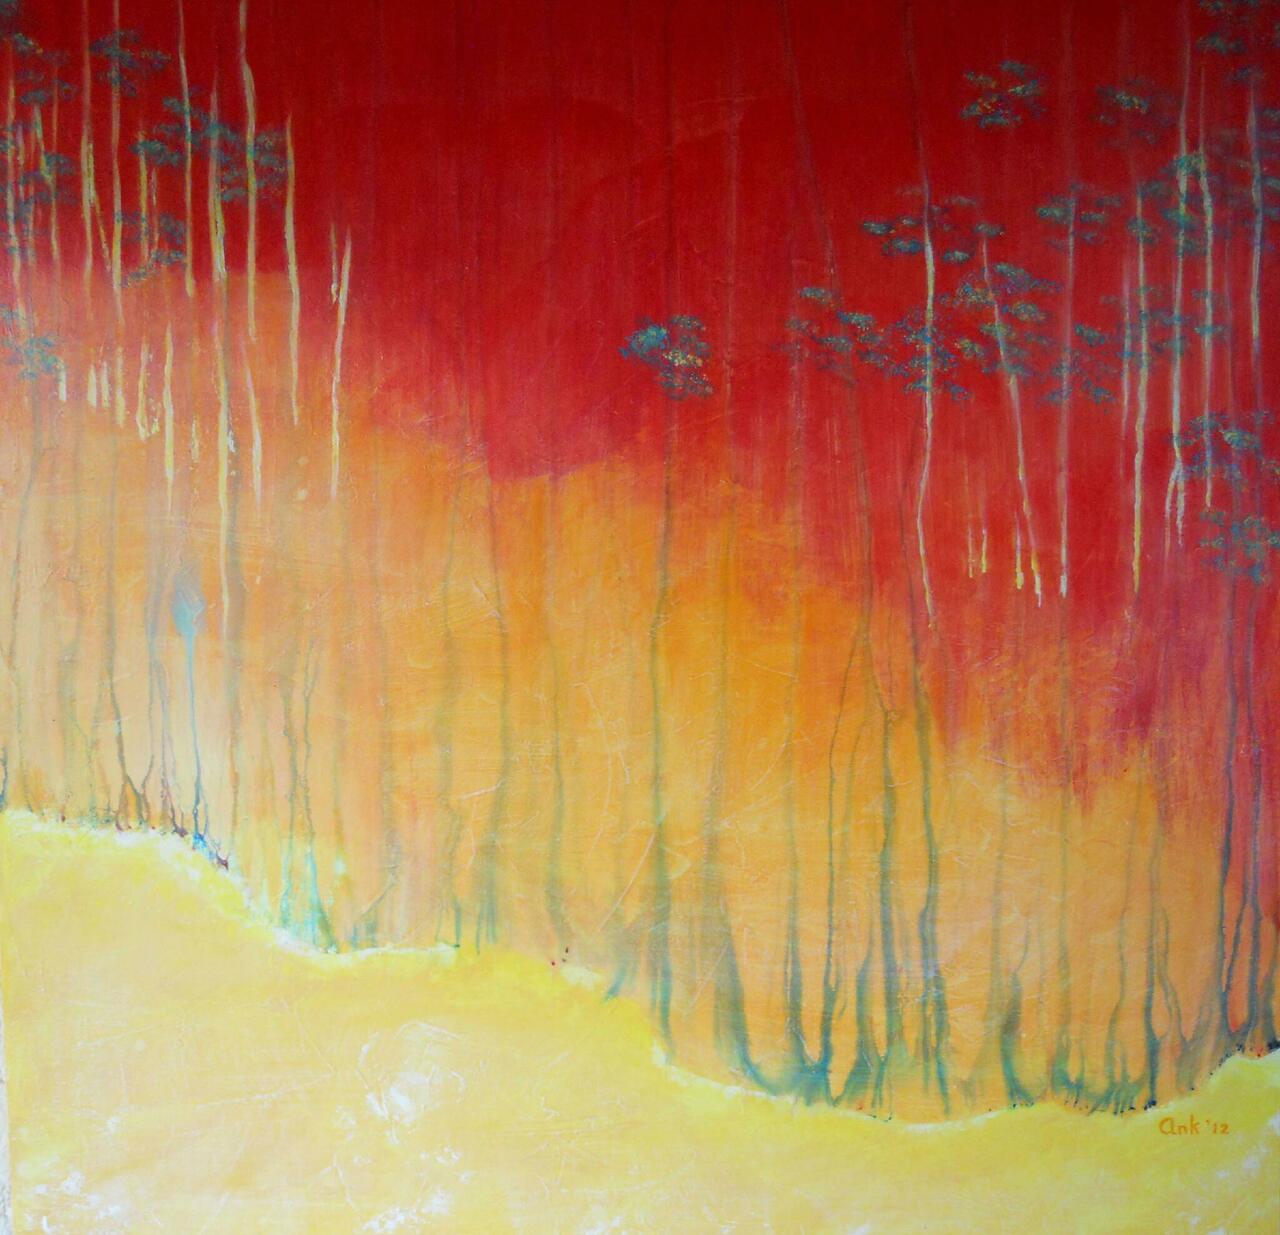 BURNING MOUNTAIN http://t.co/eTOHnyOPwF #painting #art